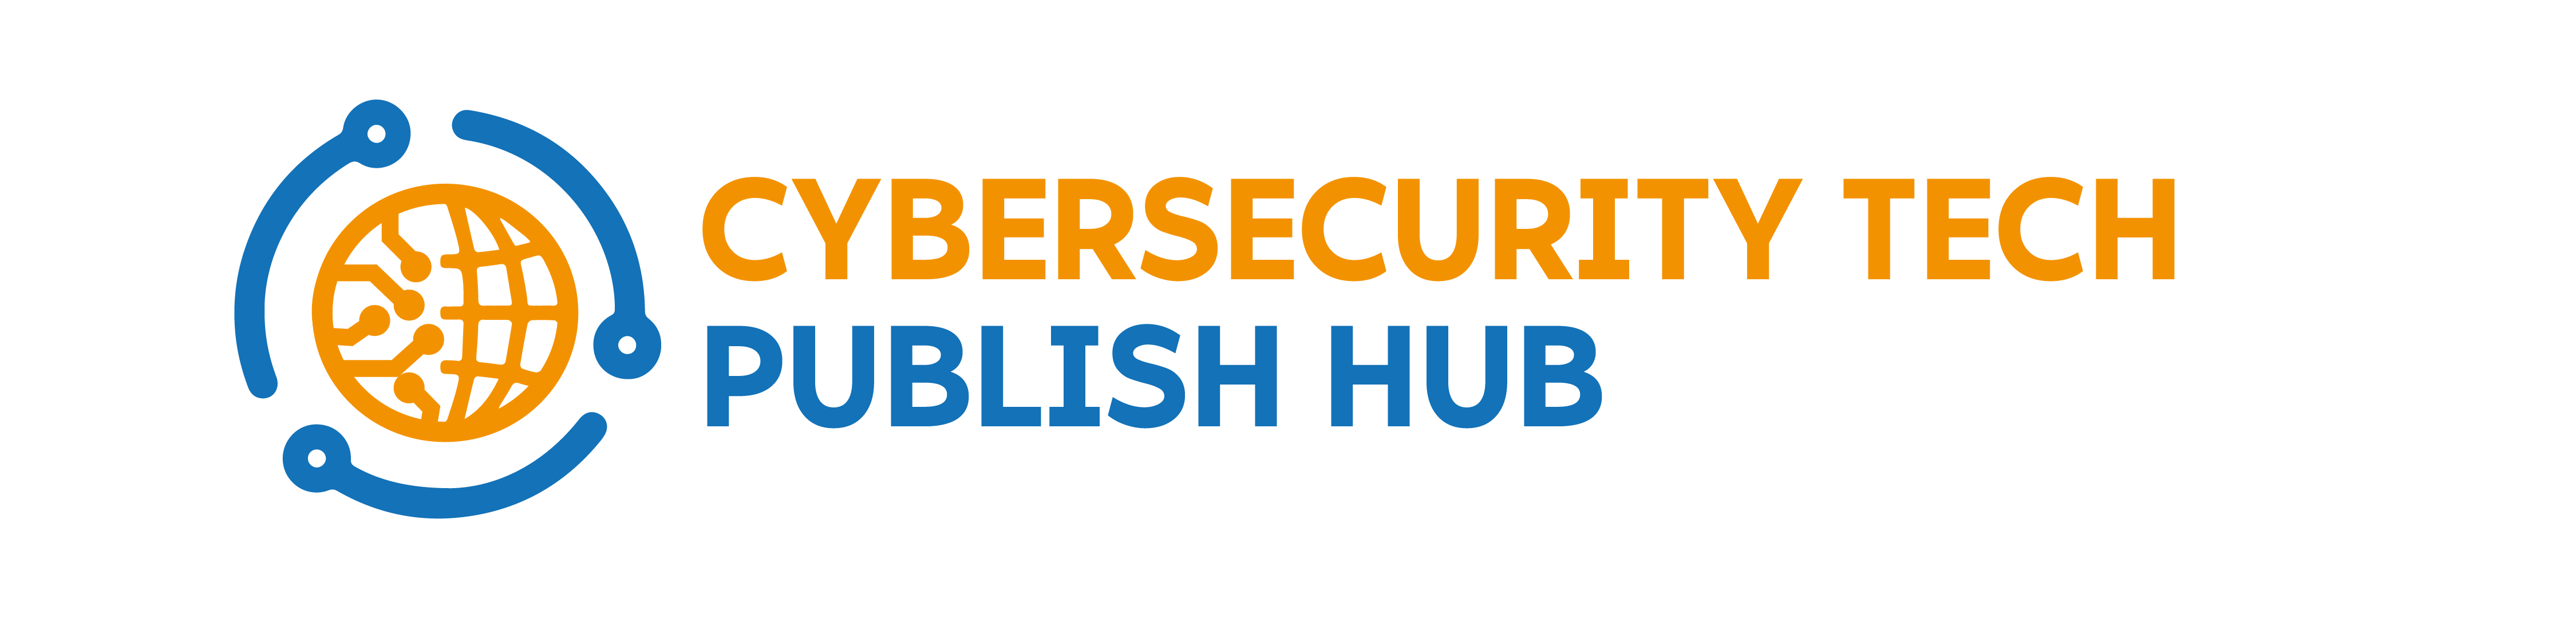 Cyber Security Tech Publish Hub